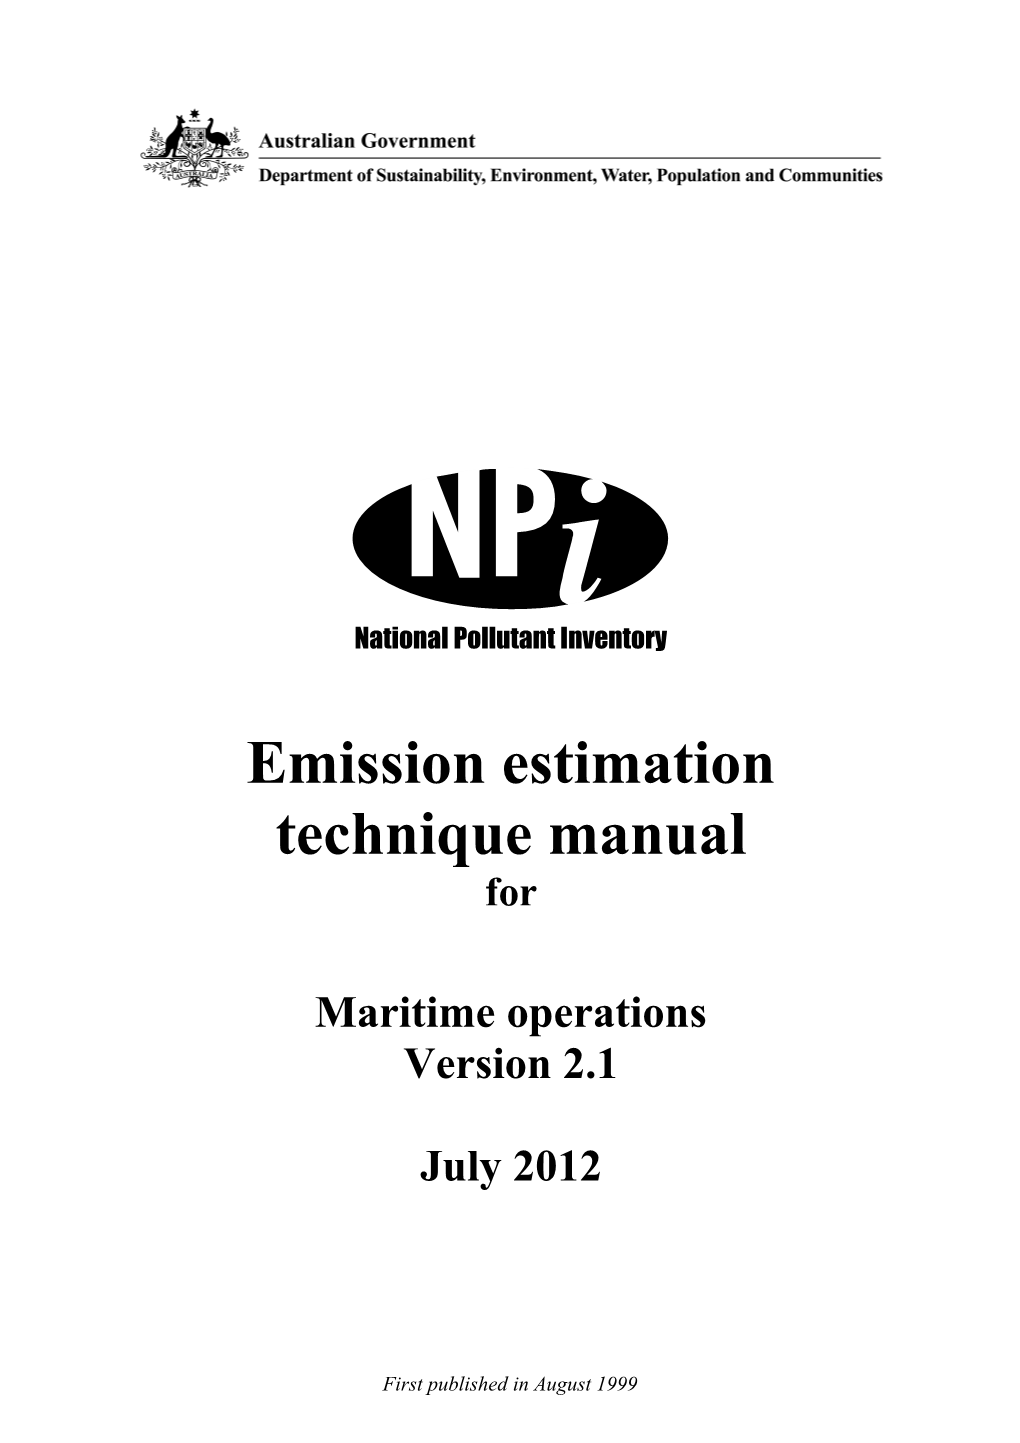 Emission Estimation Technique Manual for Maritime Operations Version 2.1